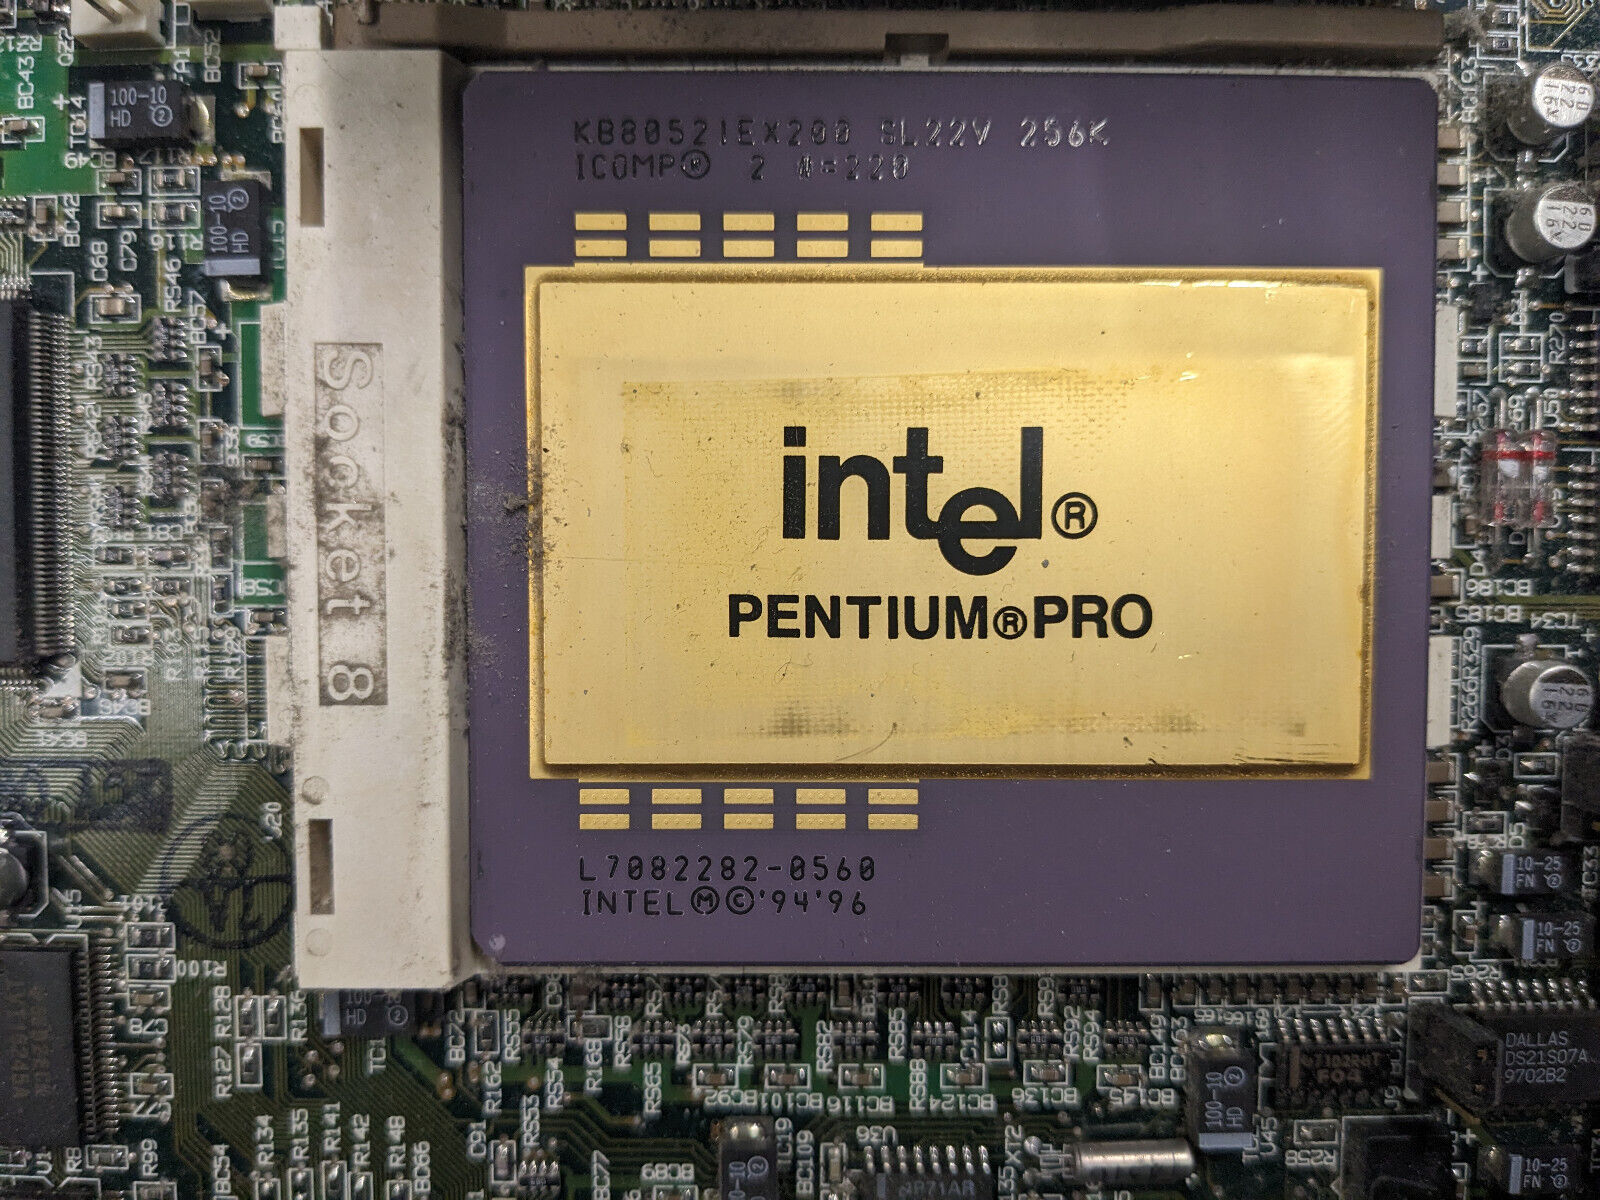 SL22Z Intel Pentium Pro 200 MHz 256K KB80521EX200 Socket 8 Gold Rare Vintage